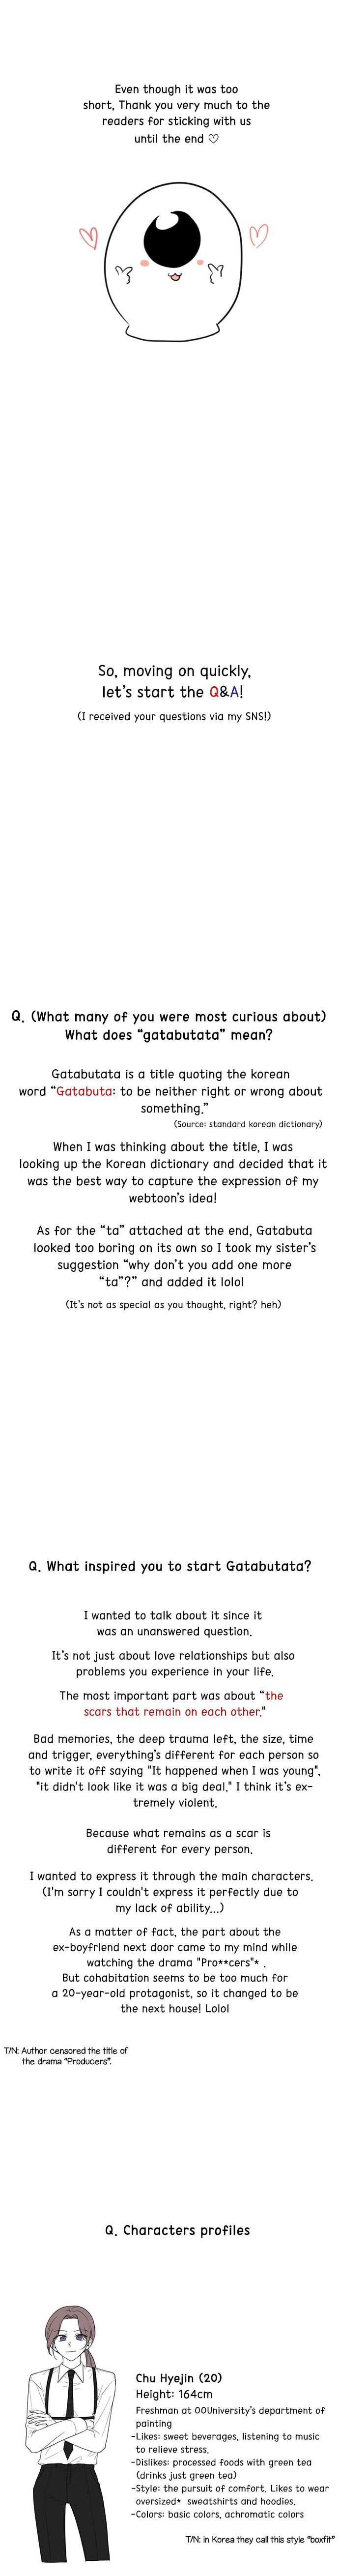 Gatabutata - Page 3